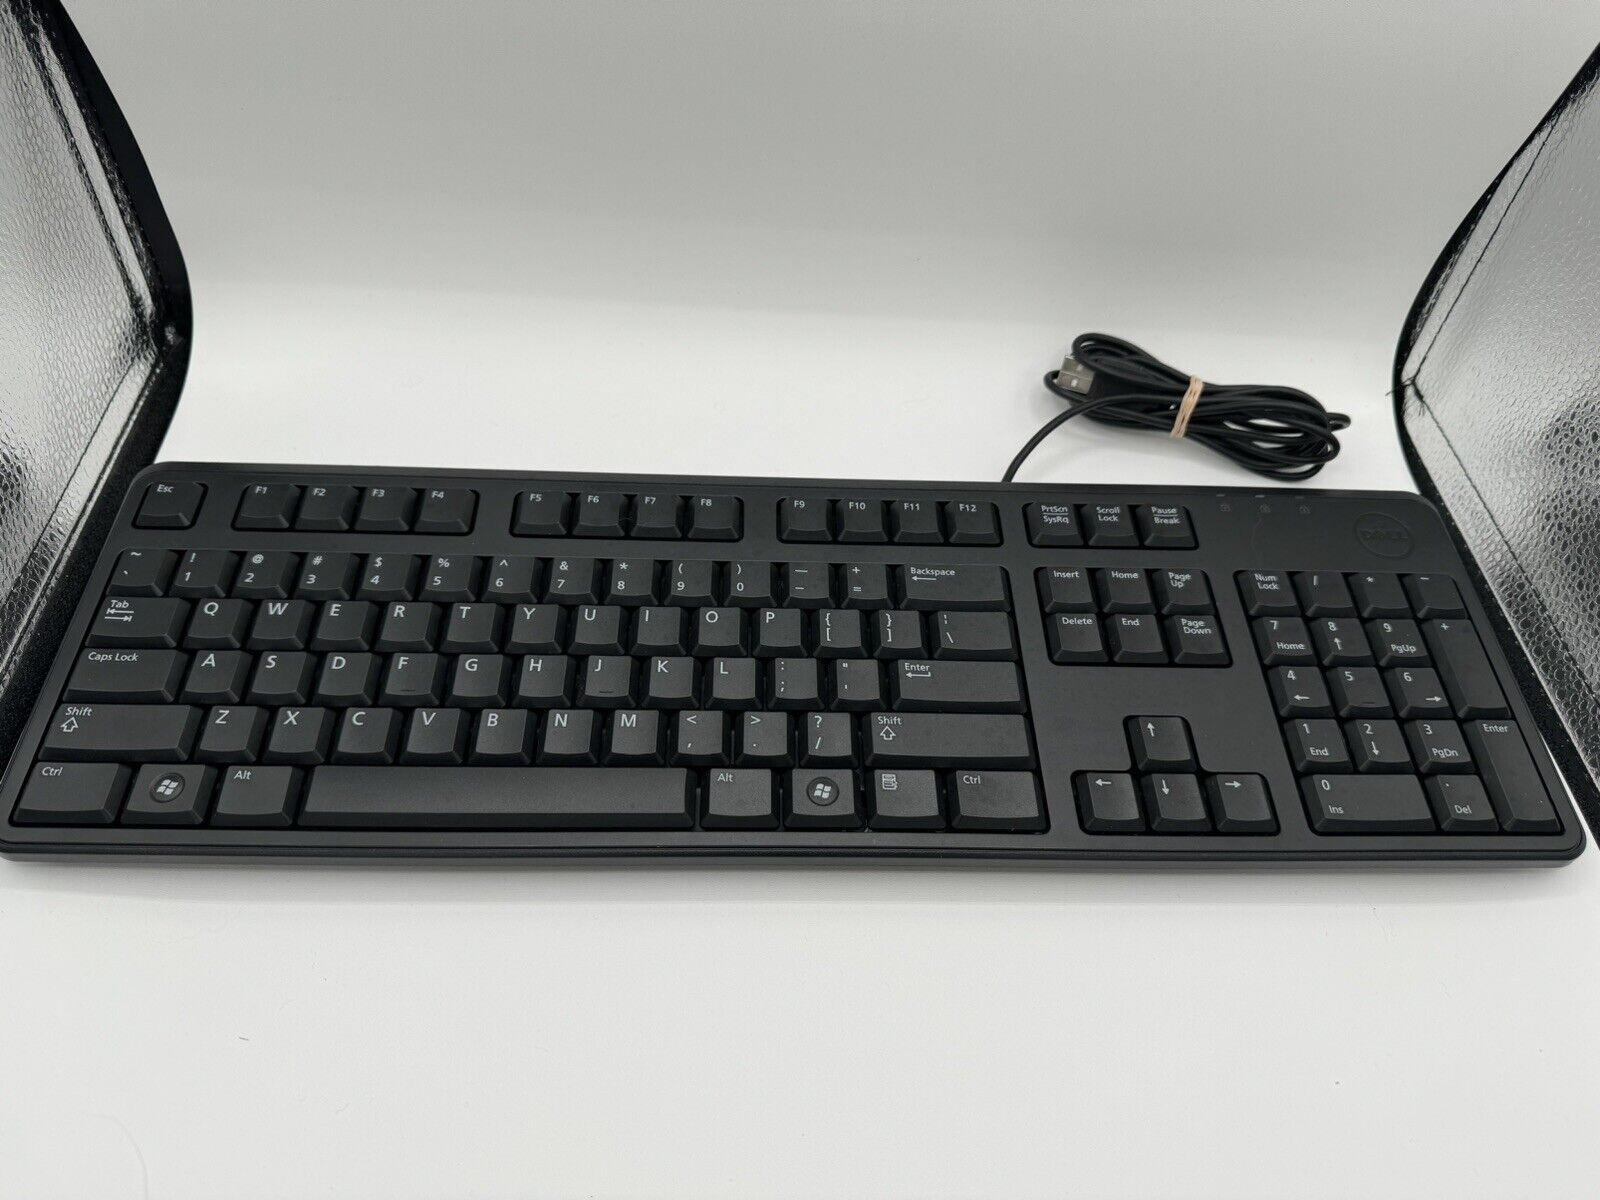 Dell KB212-B USB Quiet Key Keyboard - Black - Tested & Working - Wired